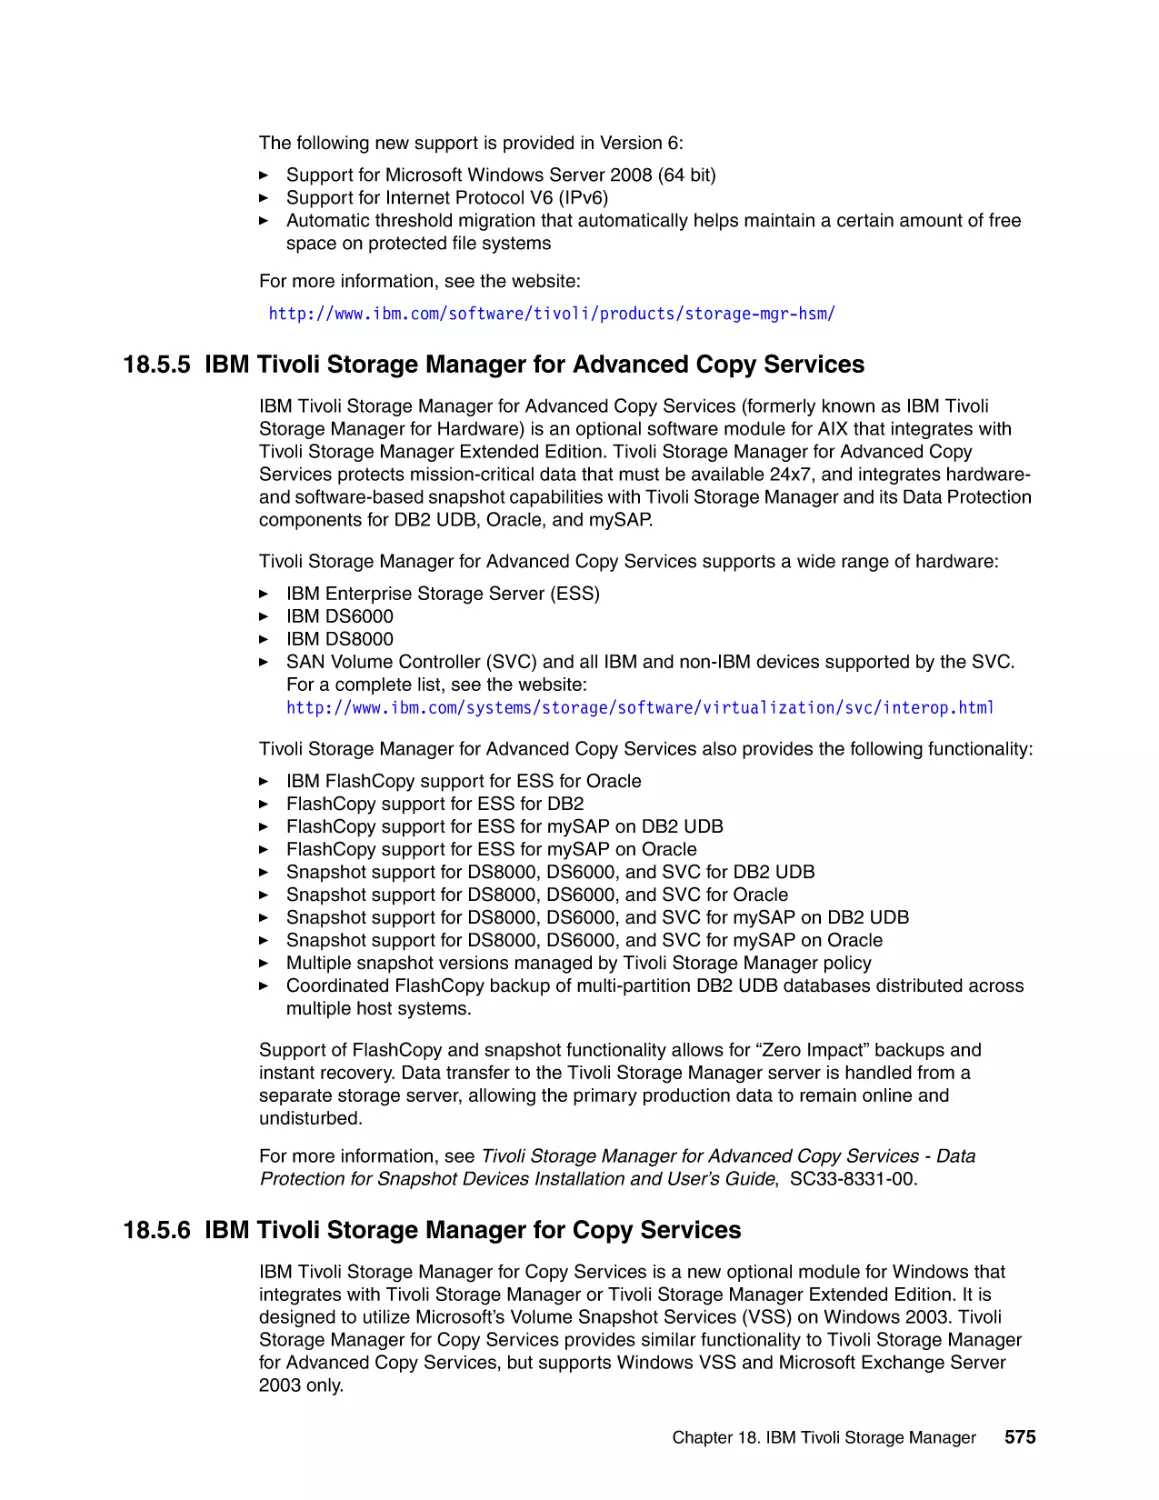 18.5.5 IBM Tivoli Storage Manager for Advanced Copy Services
18.5.6 IBM Tivoli Storage Manager for Copy Services